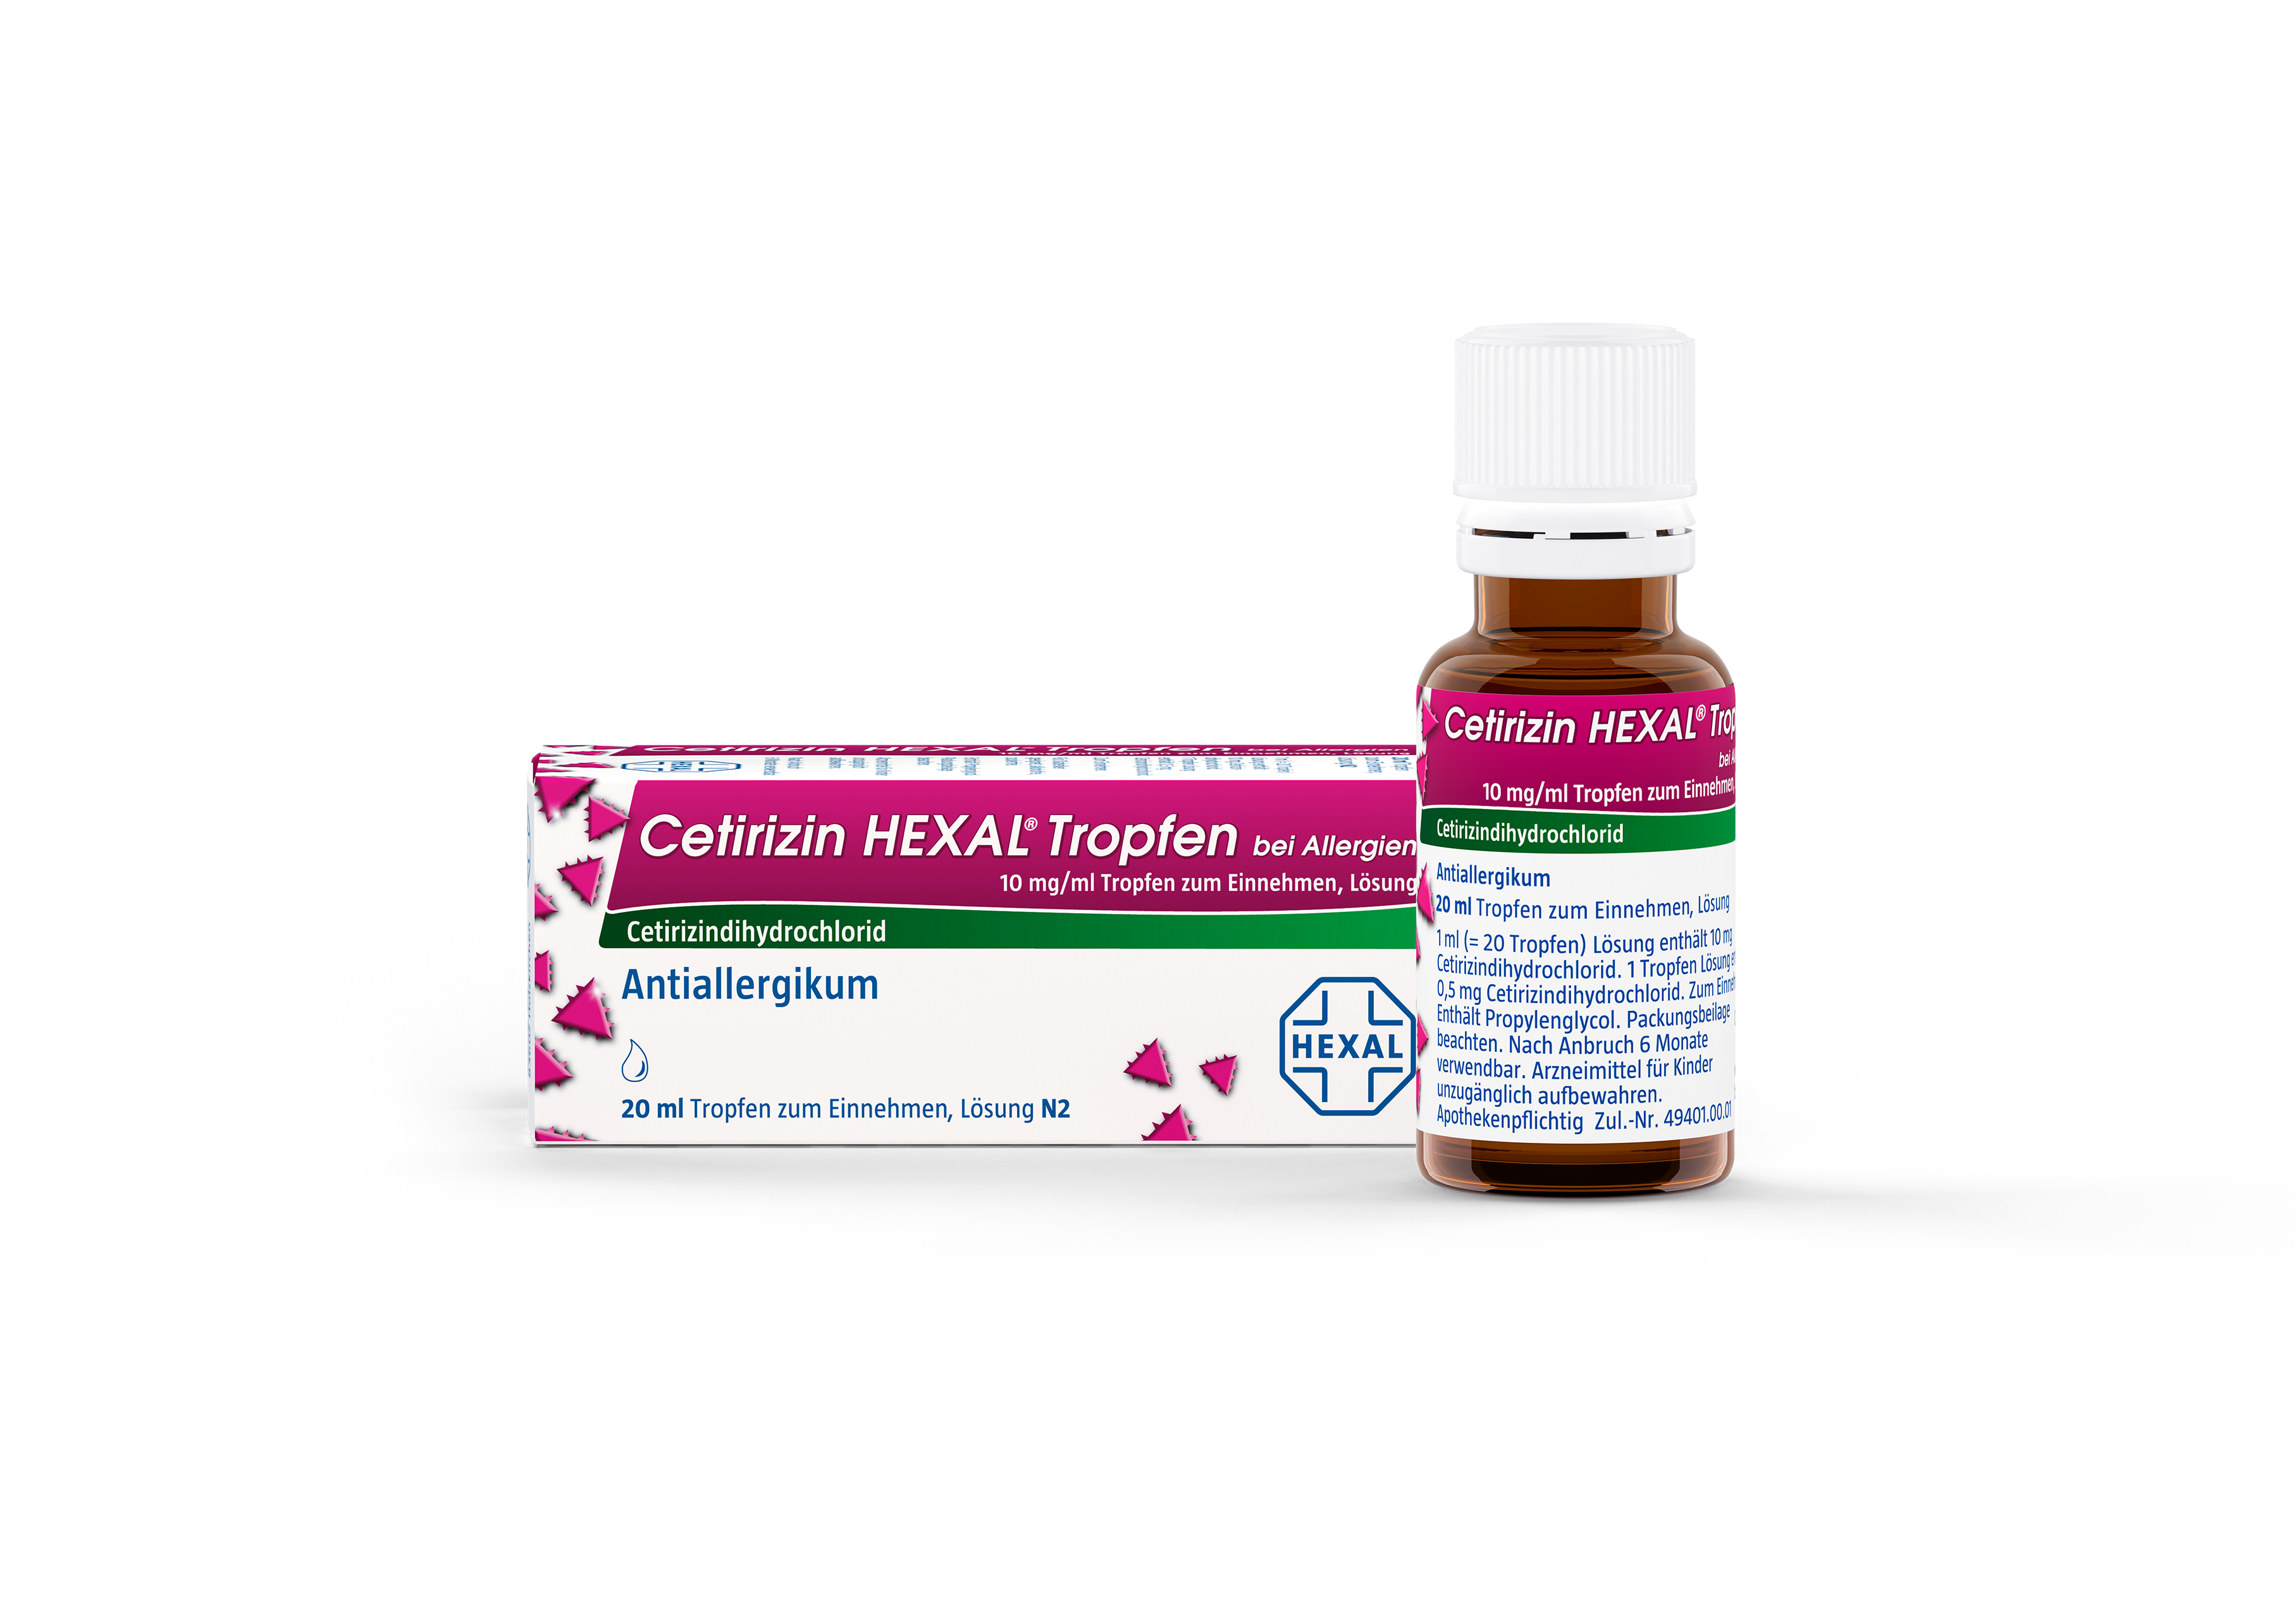 Cetirizin HEXAL bei Allergien 10mg/ml (20 ml)